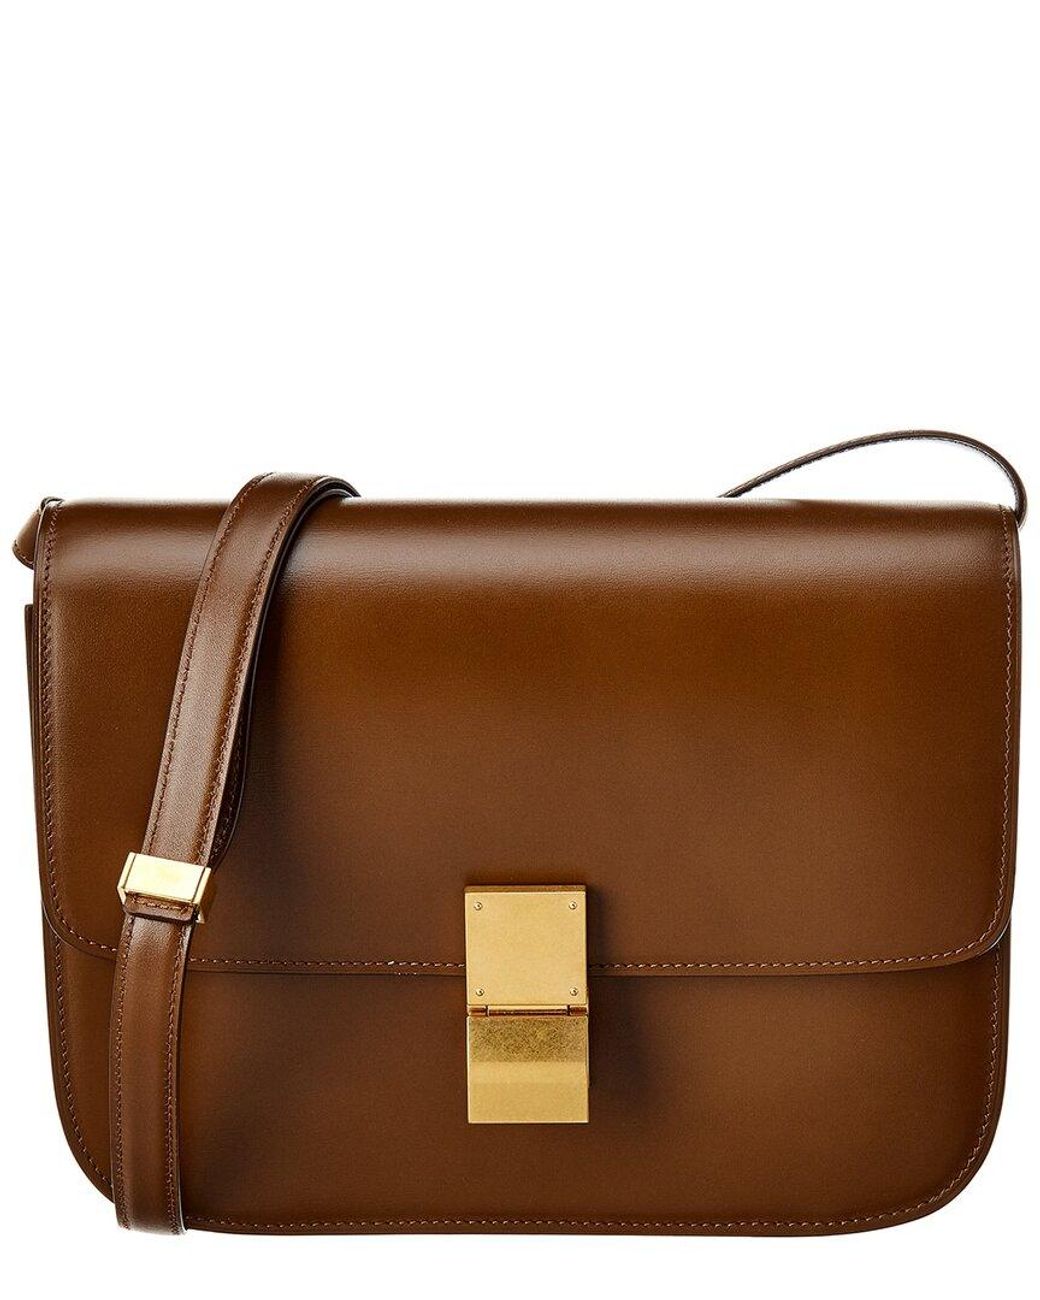 Celine Classic Medium Leather Shoulder Bag in Brown | Lyst